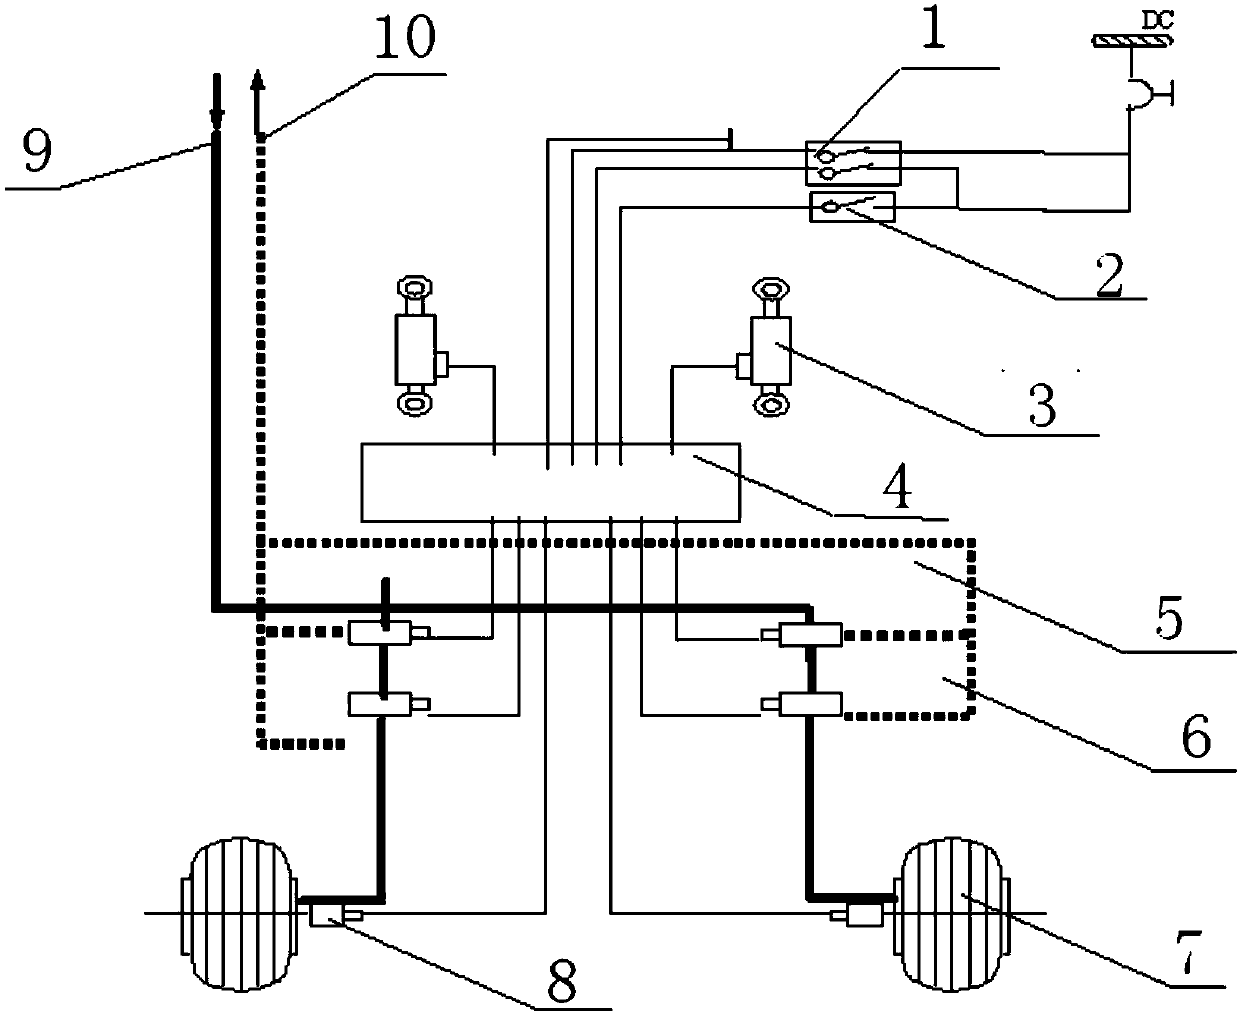 Static brake pressure linear control method of digital telex anti-skid brake system